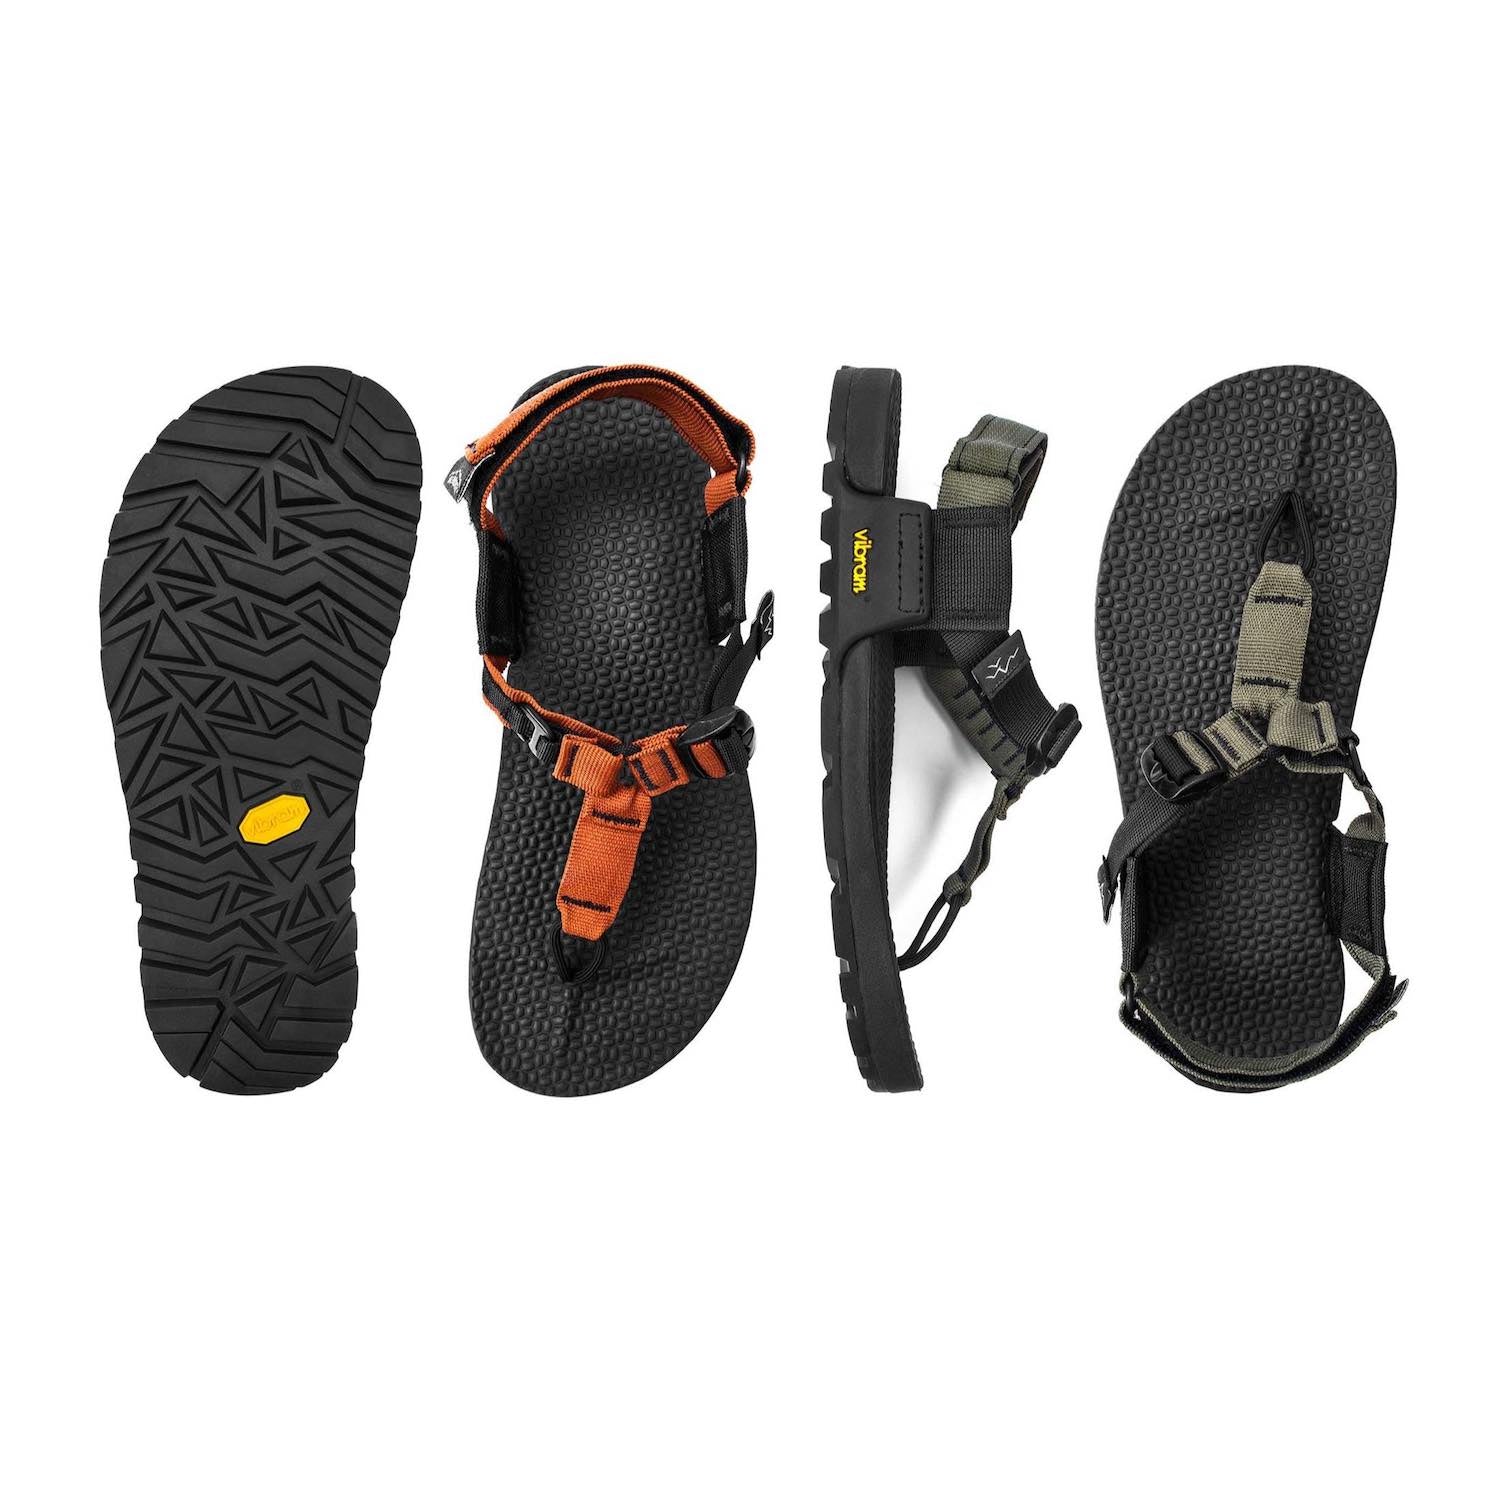 BEDROCK Cairn 3D Adventure Sandals